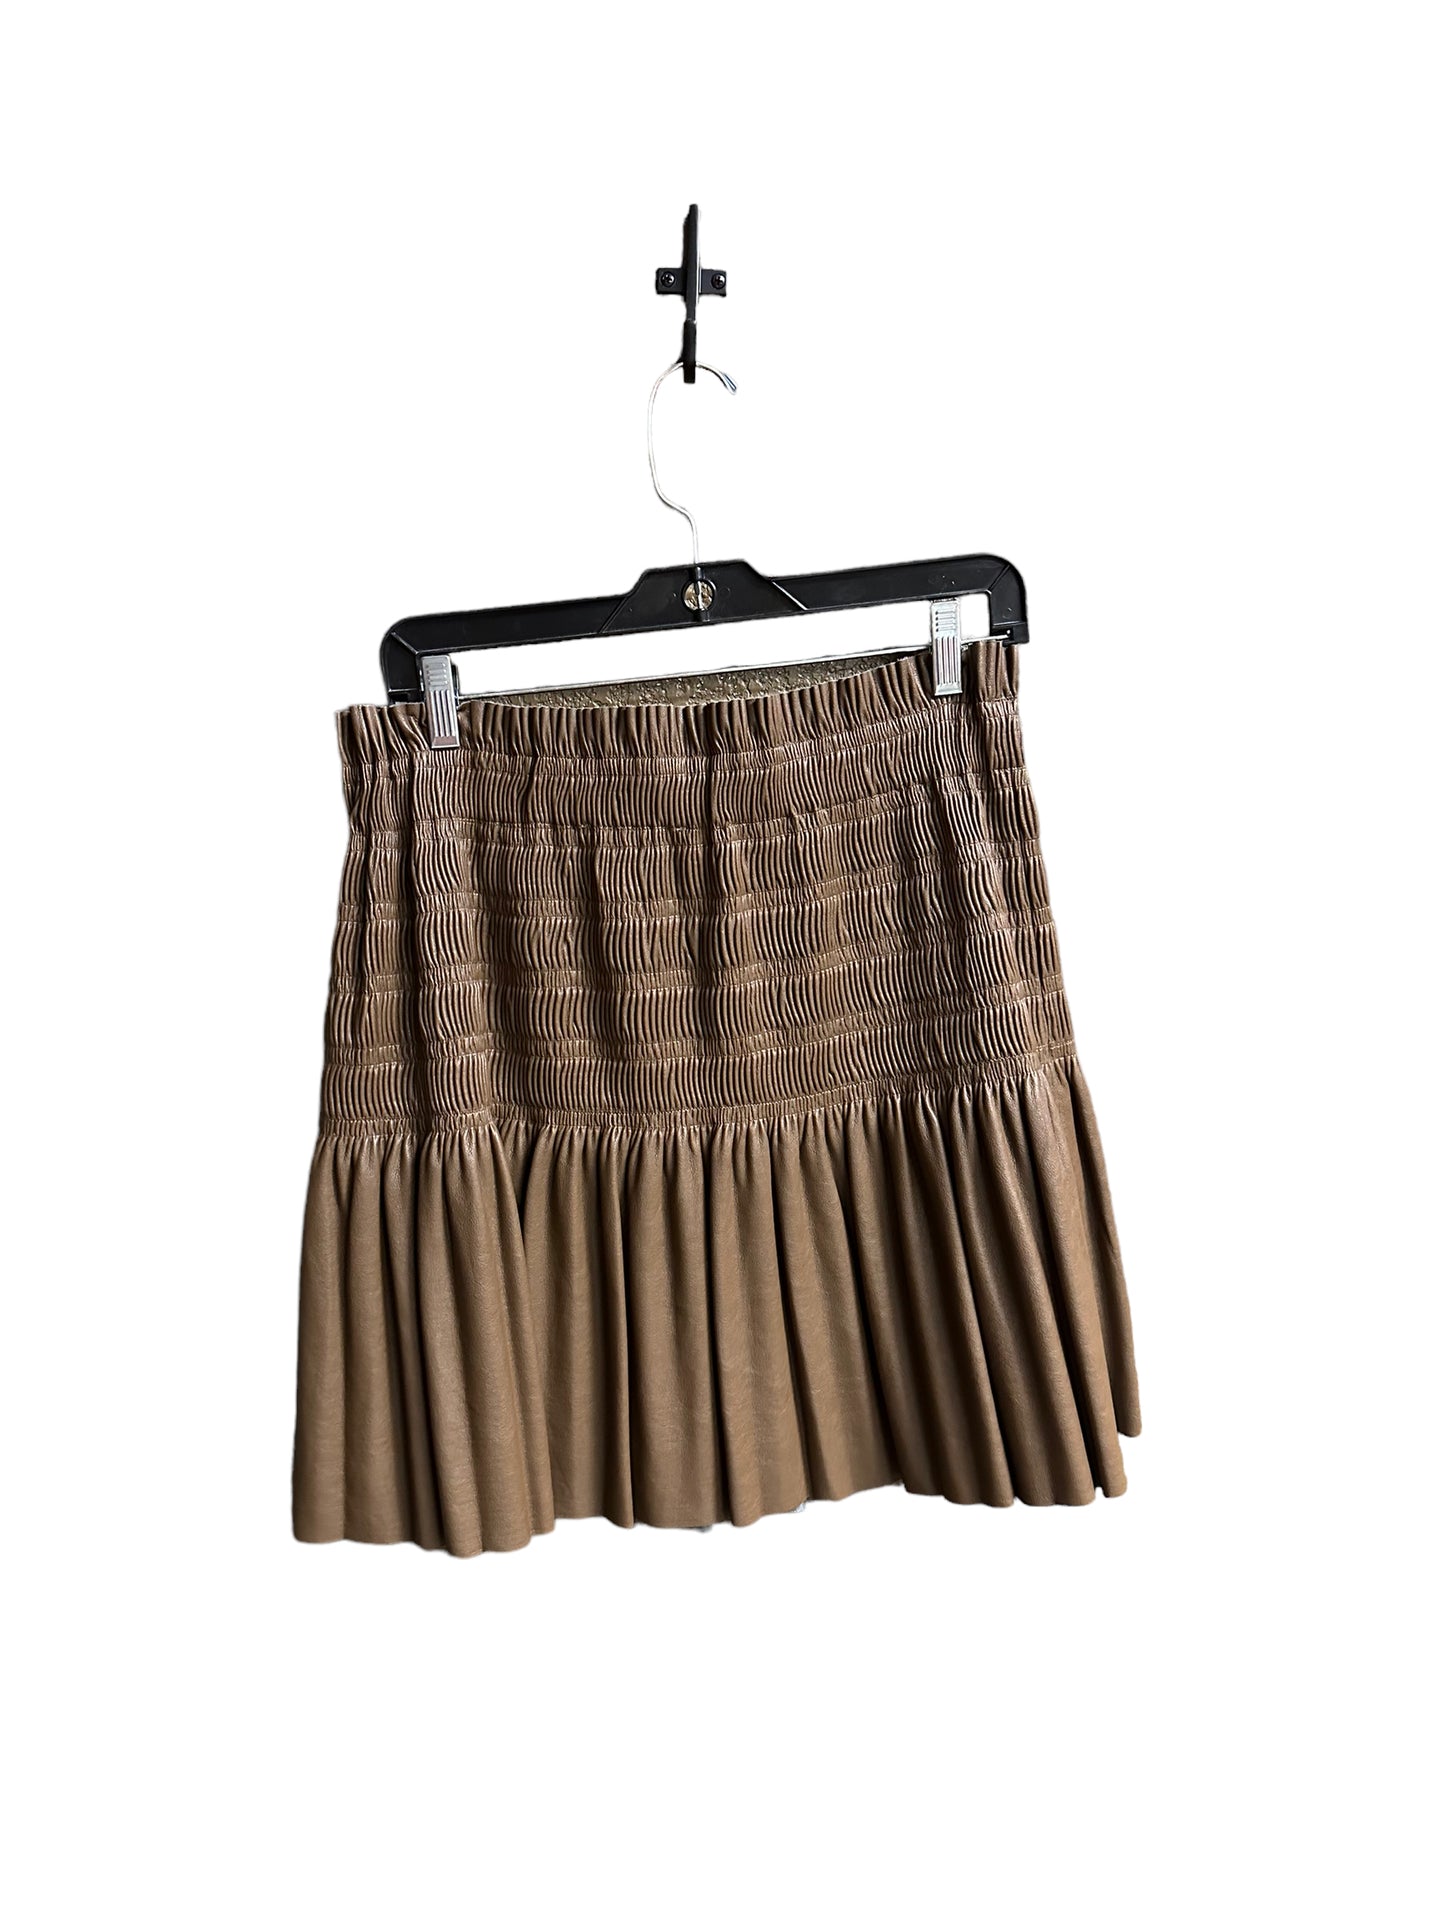 Skirt Mini & Short By Endless Rose  Size: M